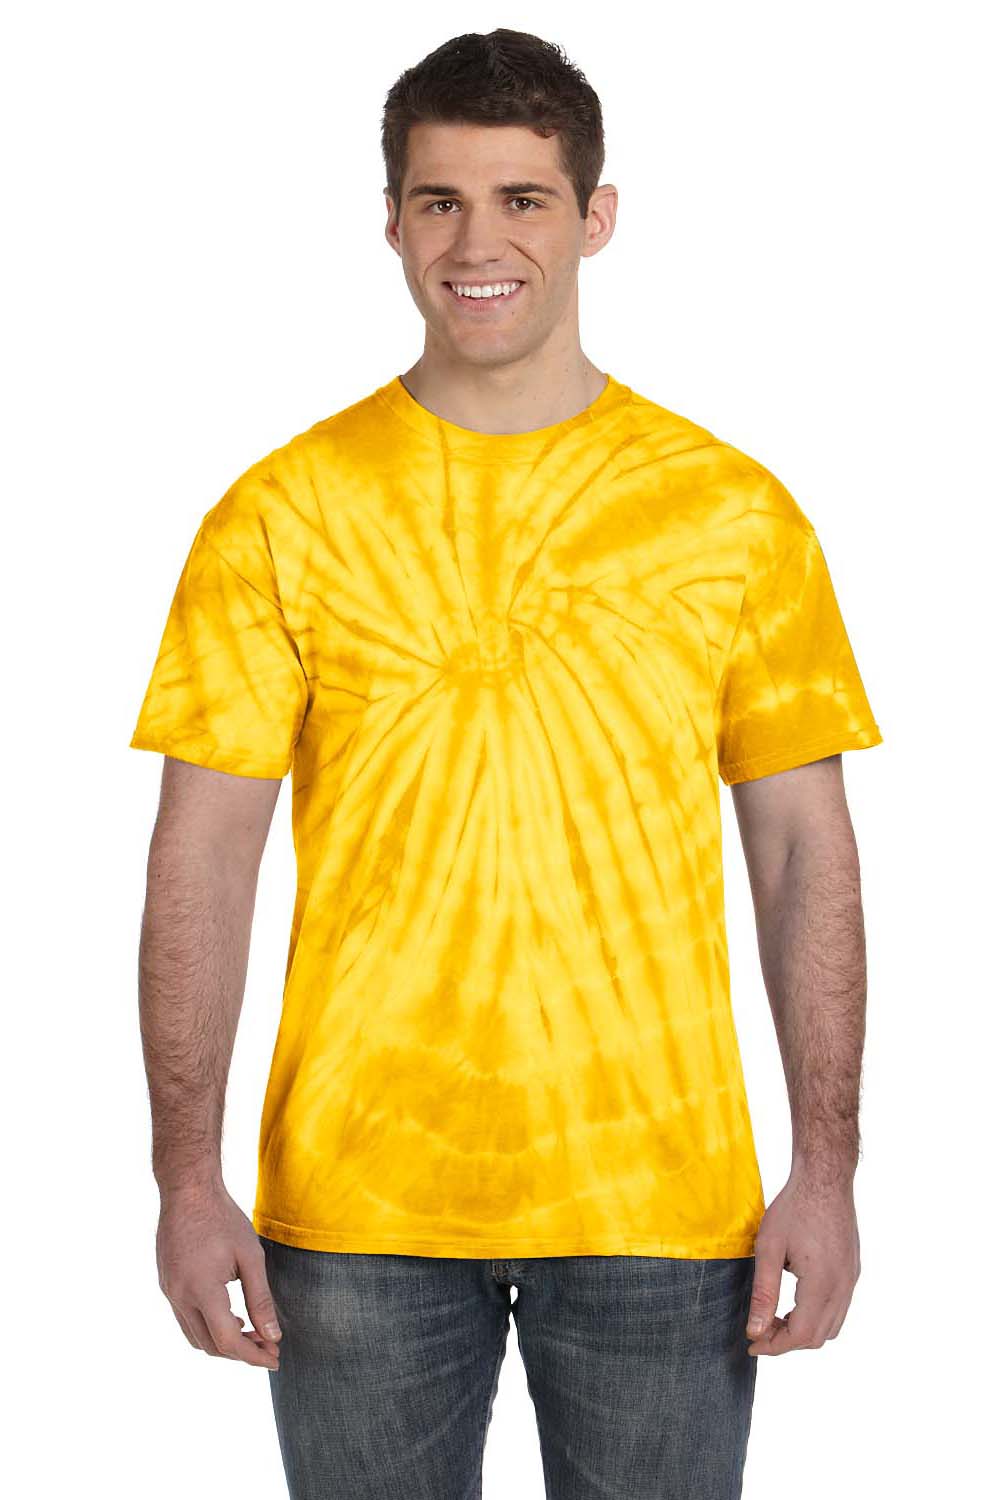 Tie-Dye CD101 Mens Short Sleeve Crewneck T-Shirt Gold Front